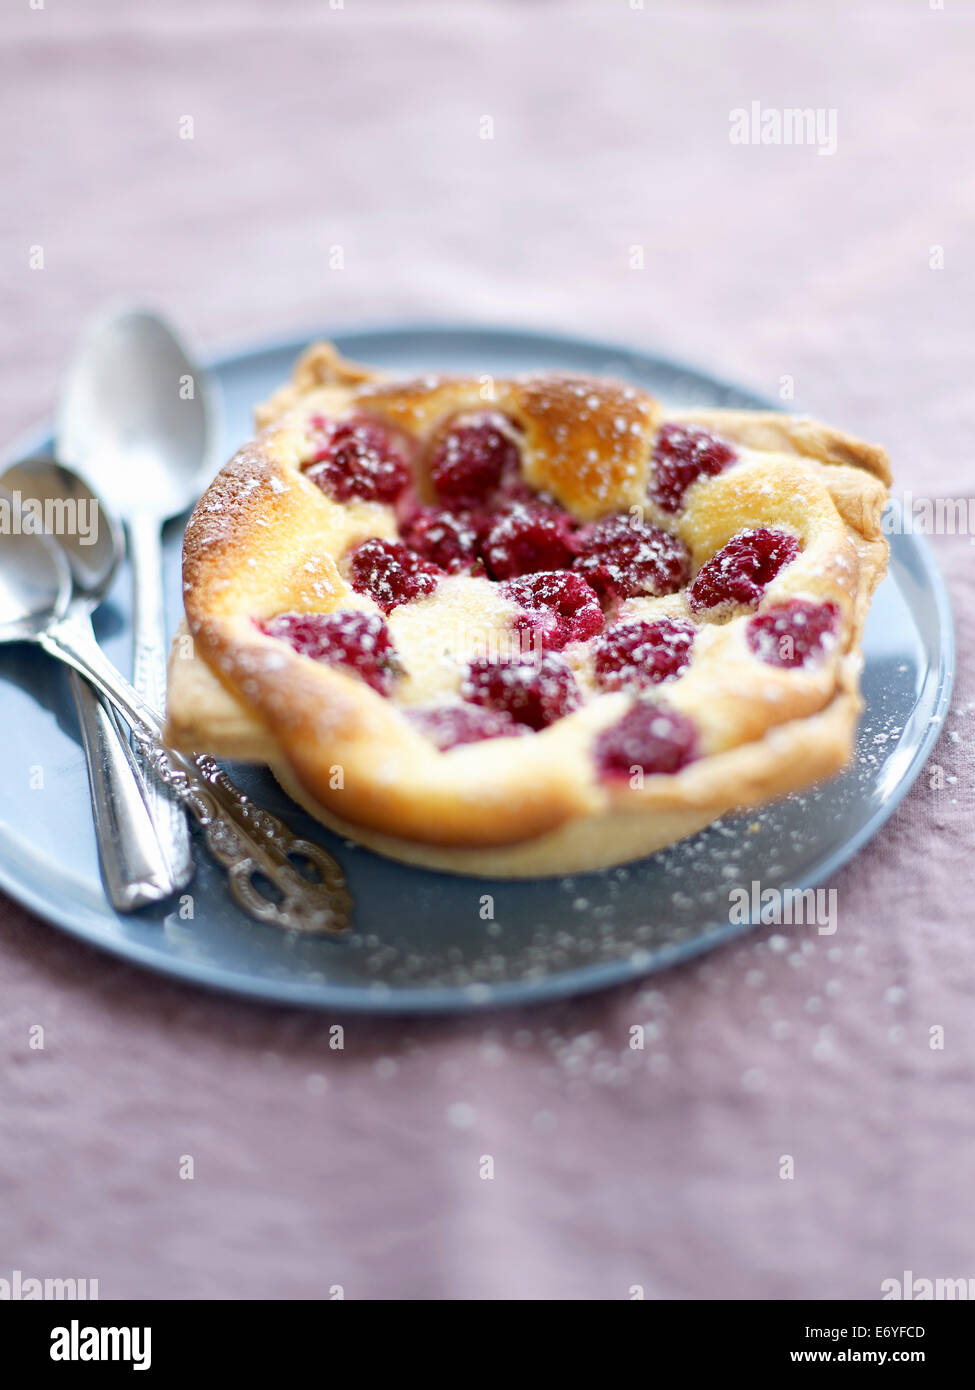 Cheesecake-style raspberry tartlet Stock Photo